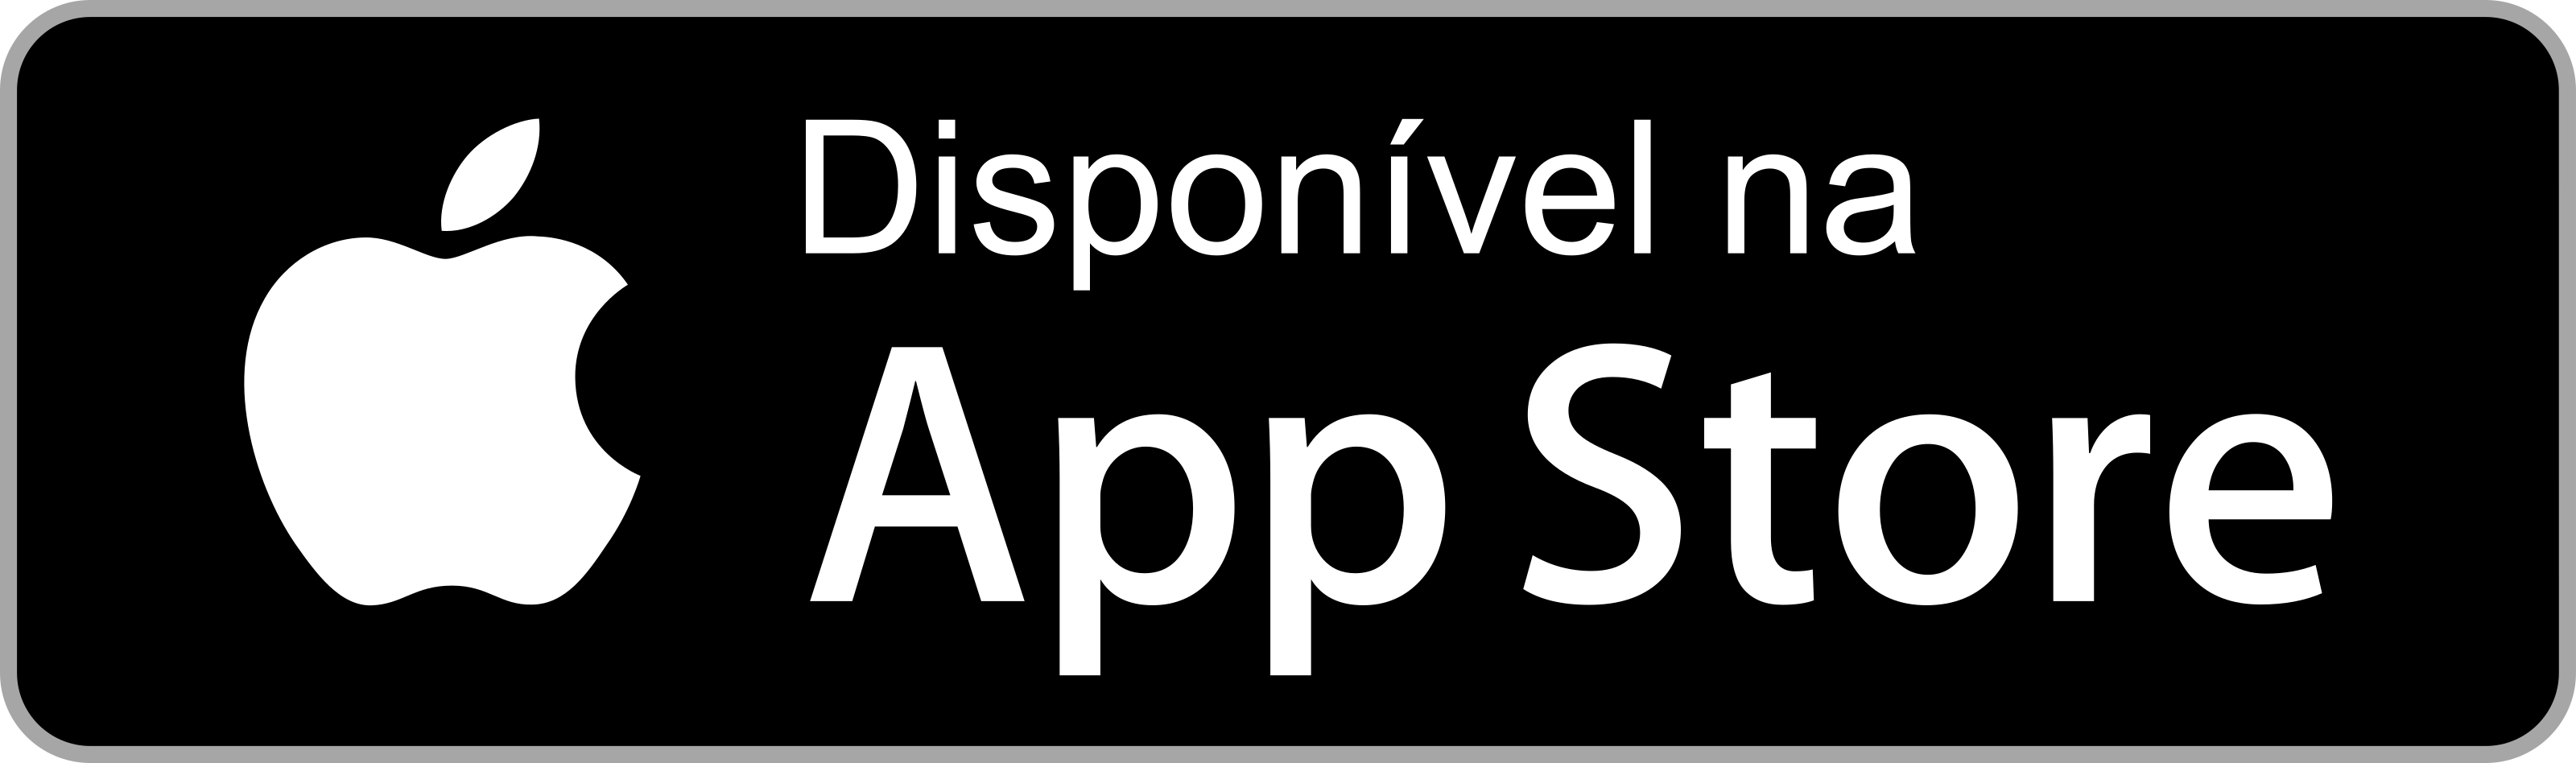 disponivel-na-app-store-botao-1